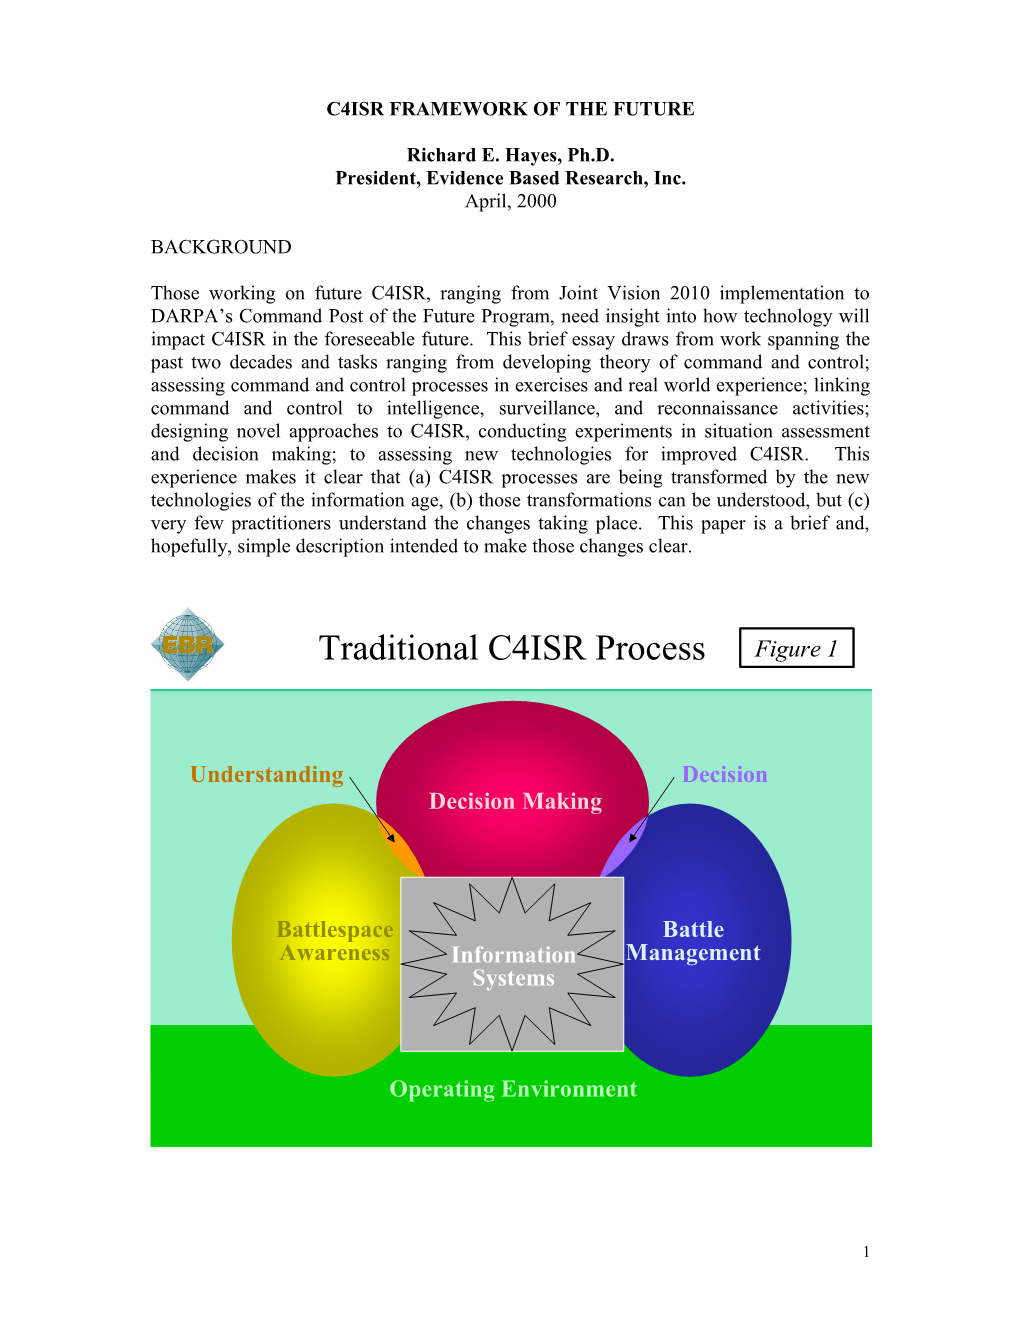 C4isr Framework of the Future